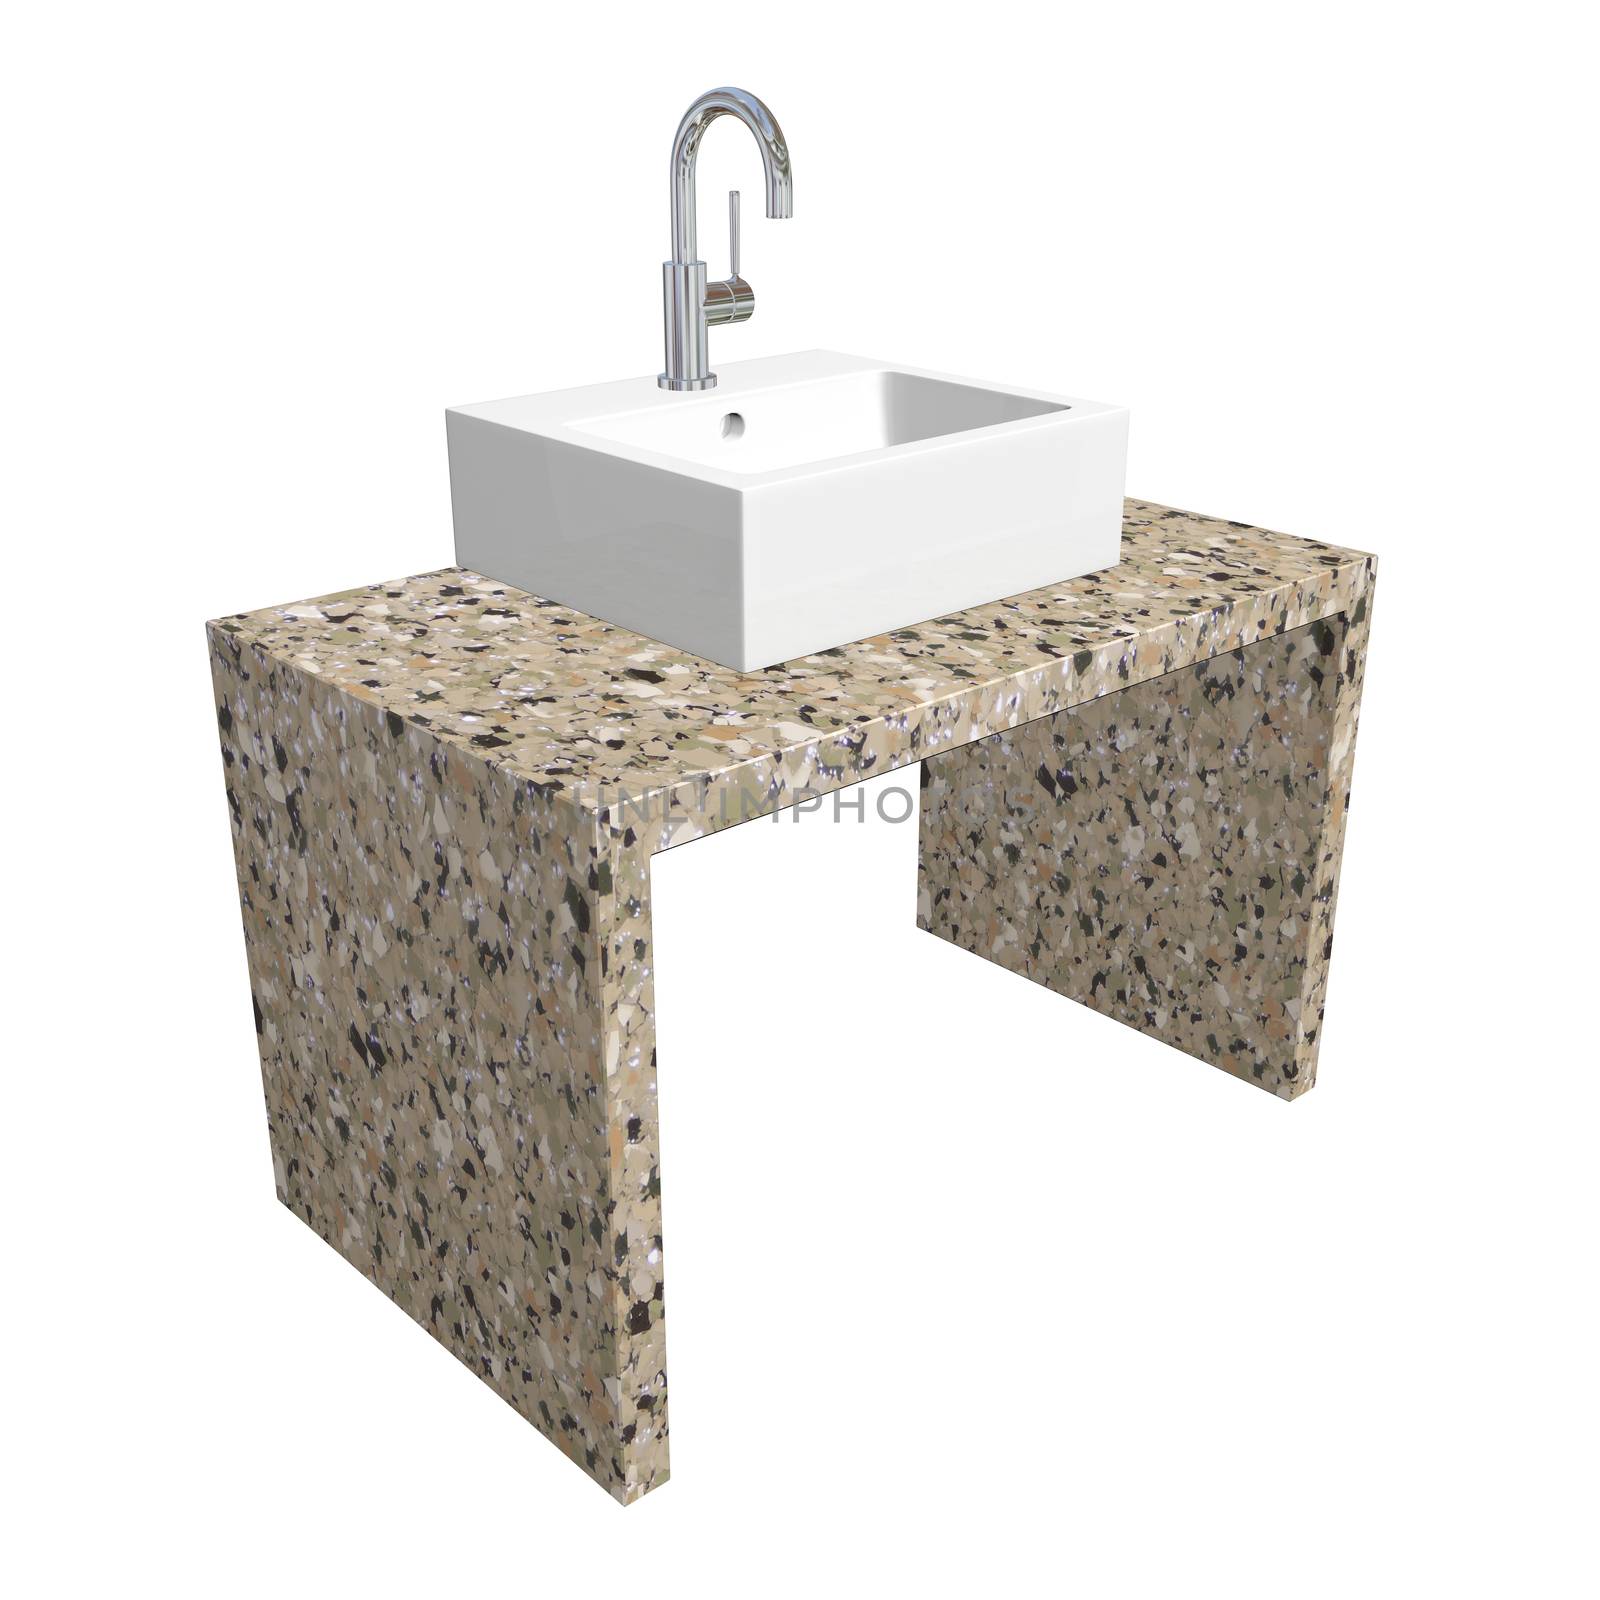 Modern bathroom sink set with ceramic or acrylic wash basin, chr by Morphart